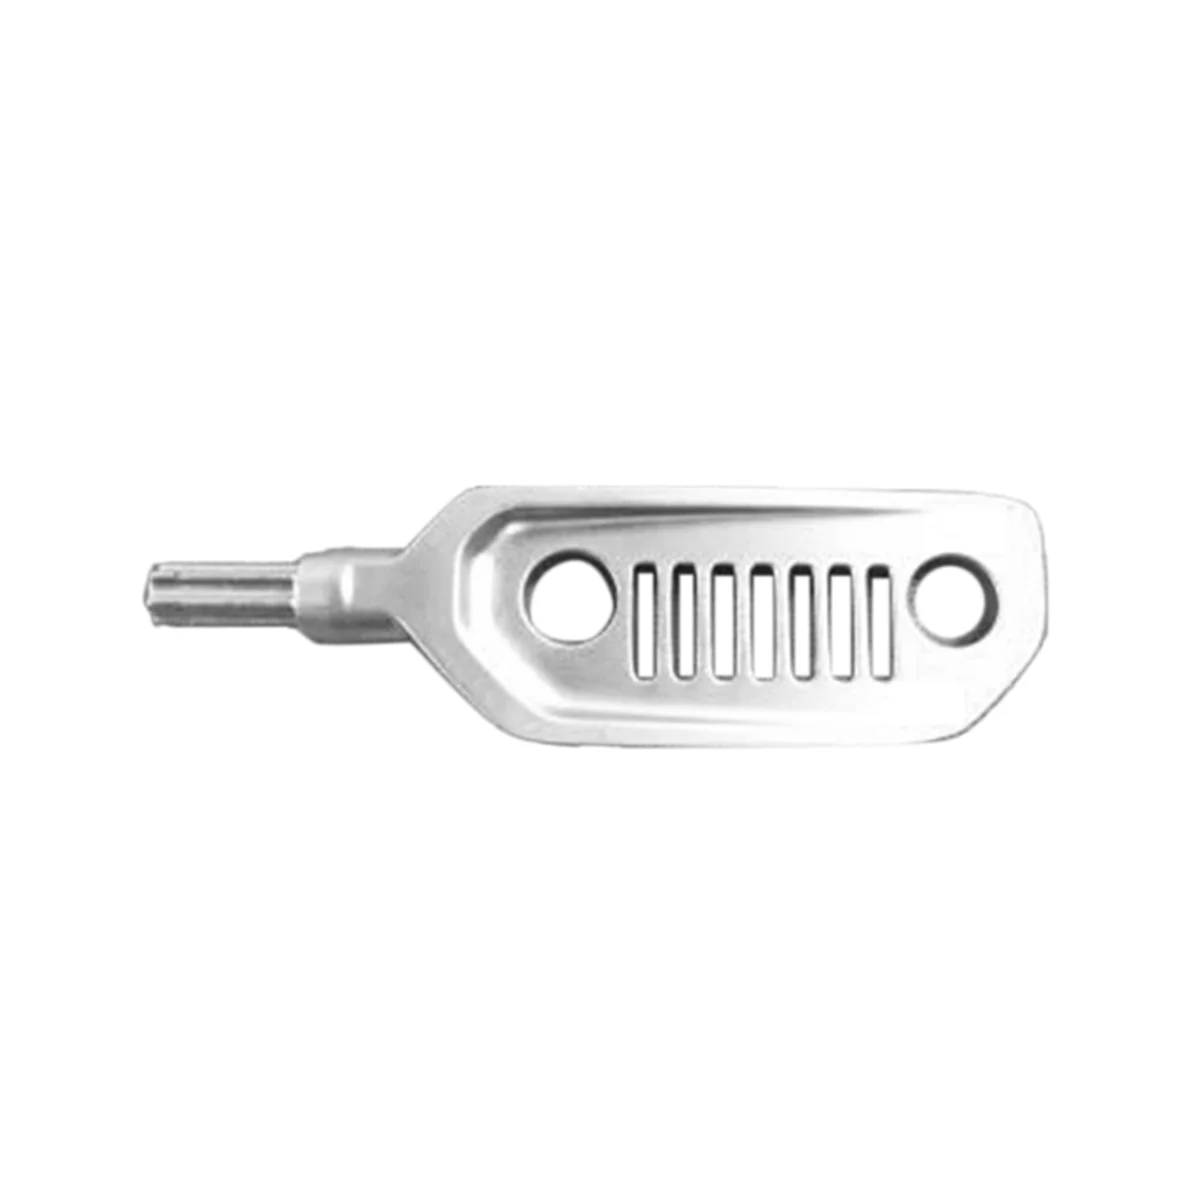 

Автомобильный ключ Sunroof Sky, Звездный ключ, инструмент Freedom Top Panel Wrench 68260458AB для Jeep Renegade